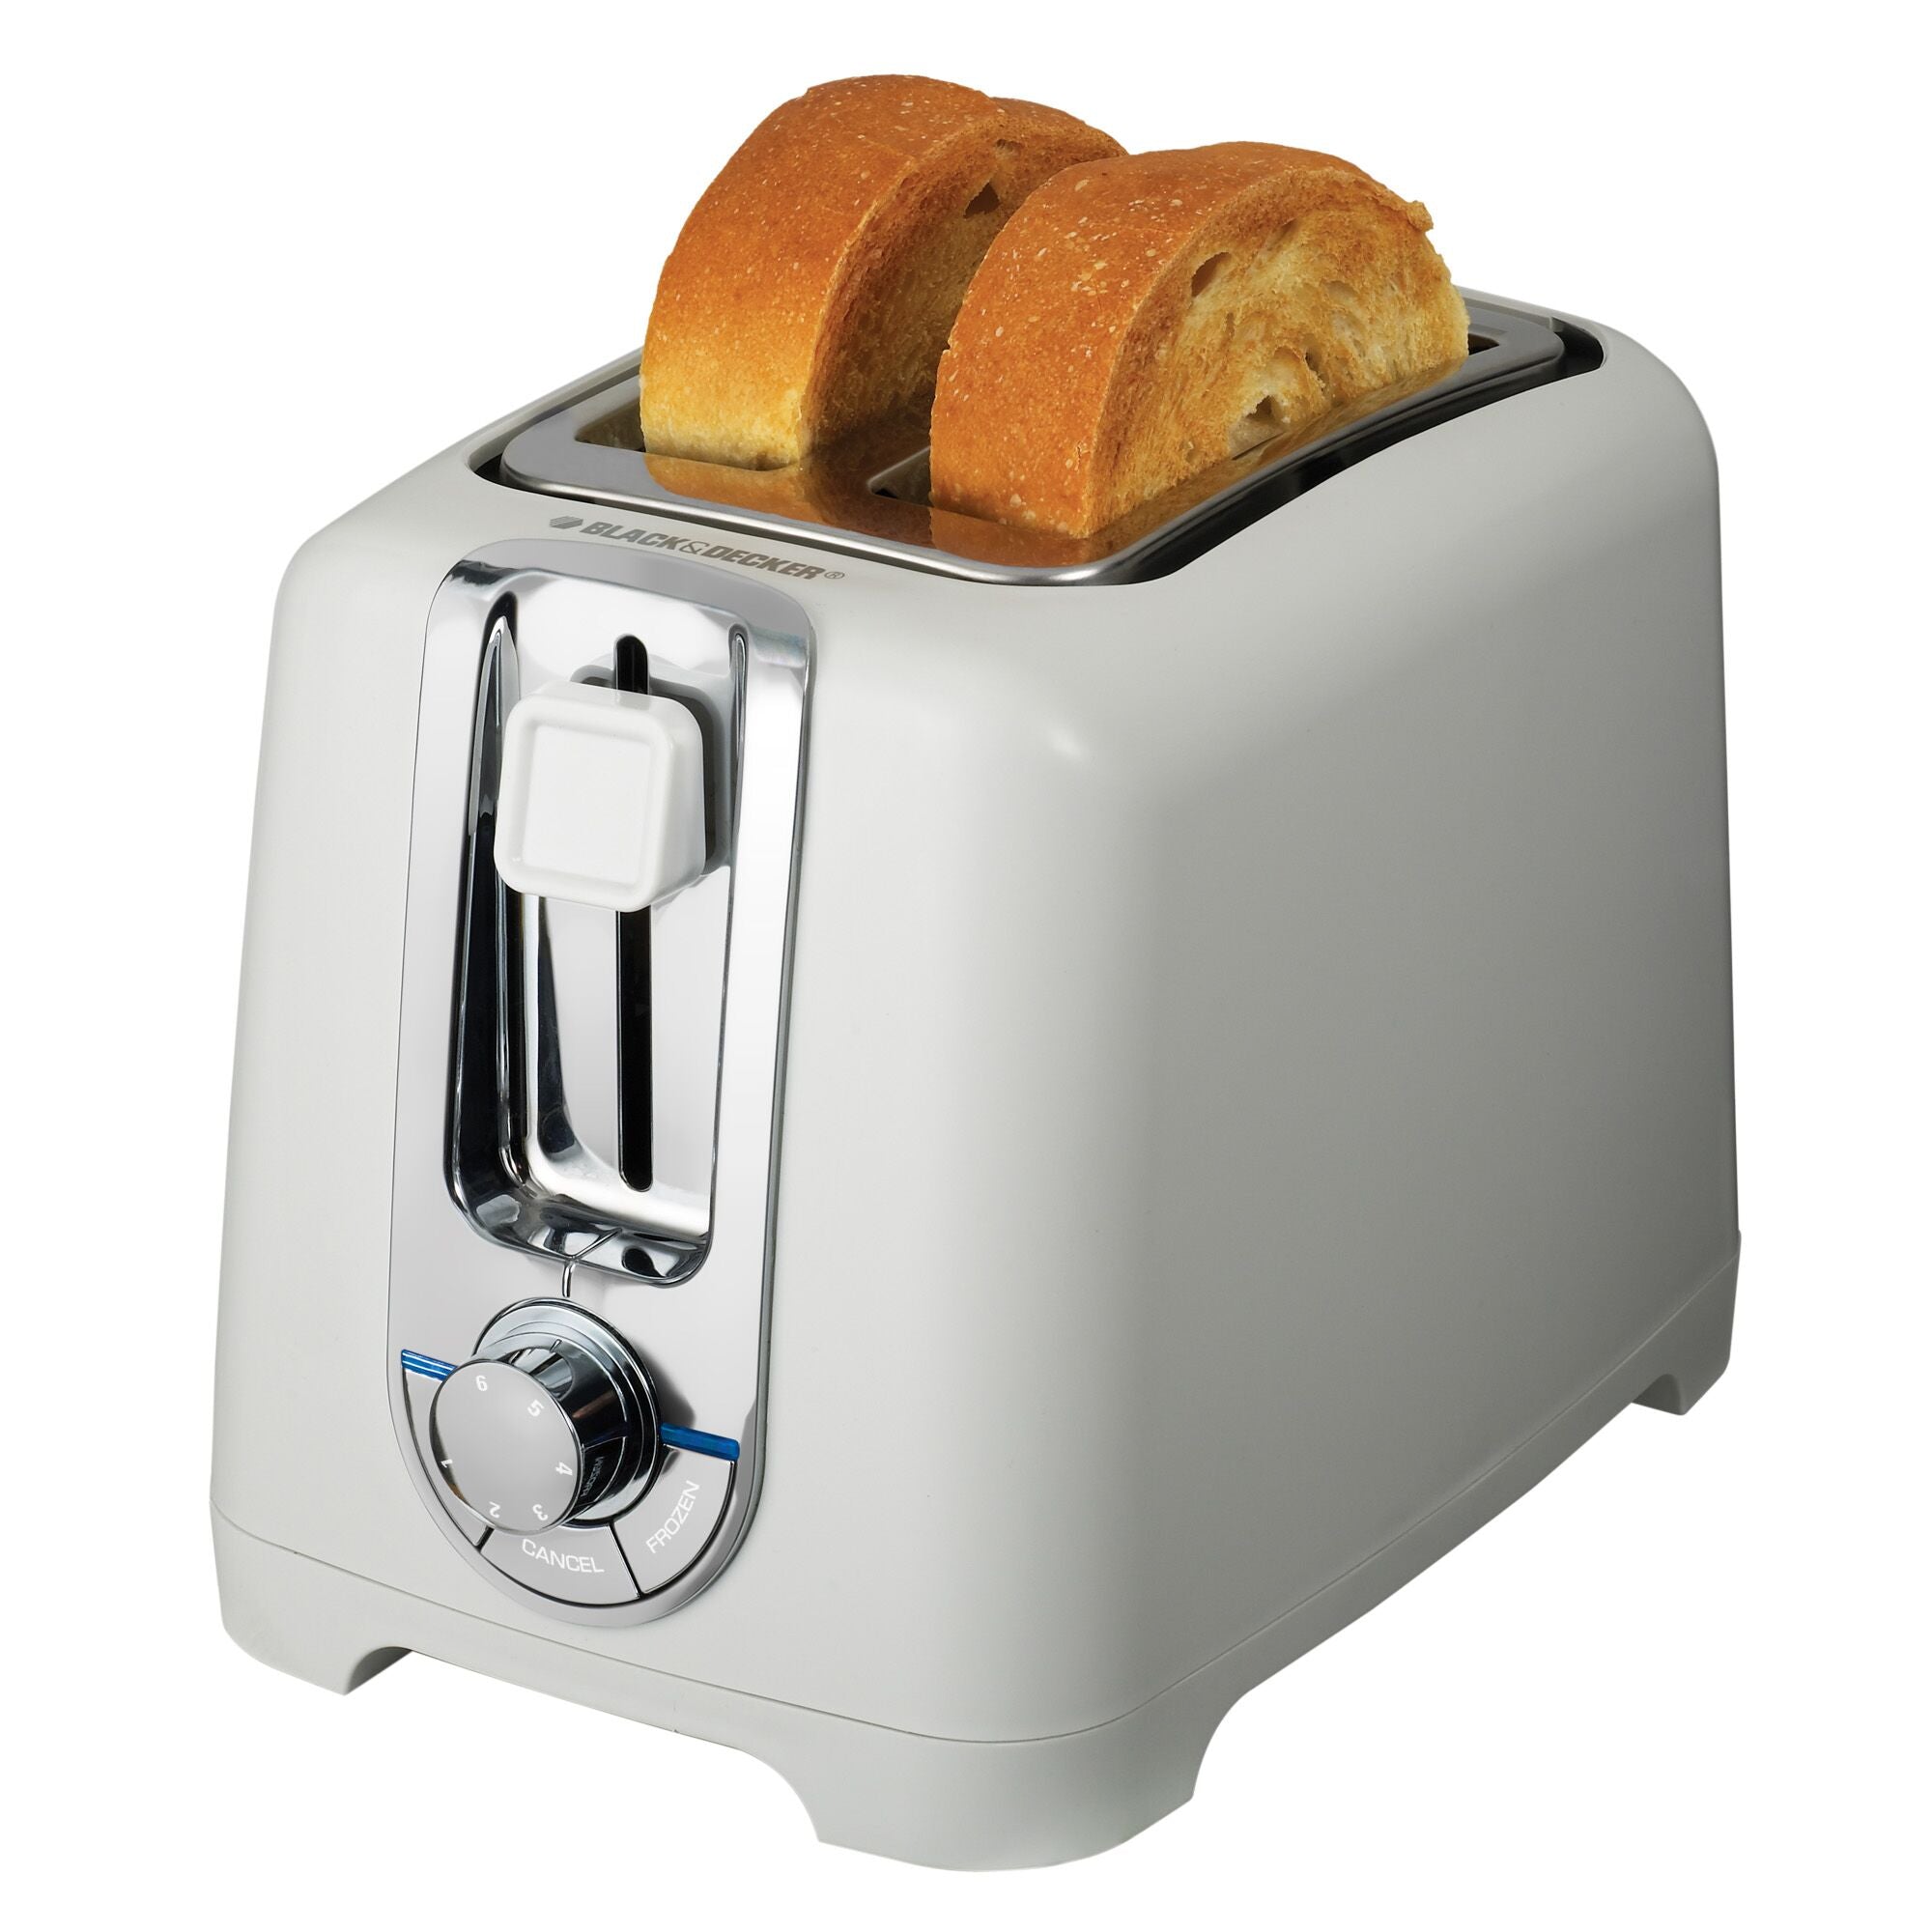 Тостер для хлеба купить. Тостер Аселайн ТС-2000. Тостер Black Toast. KL-5067 белый тостер Kelli. Хлеб для тостера.